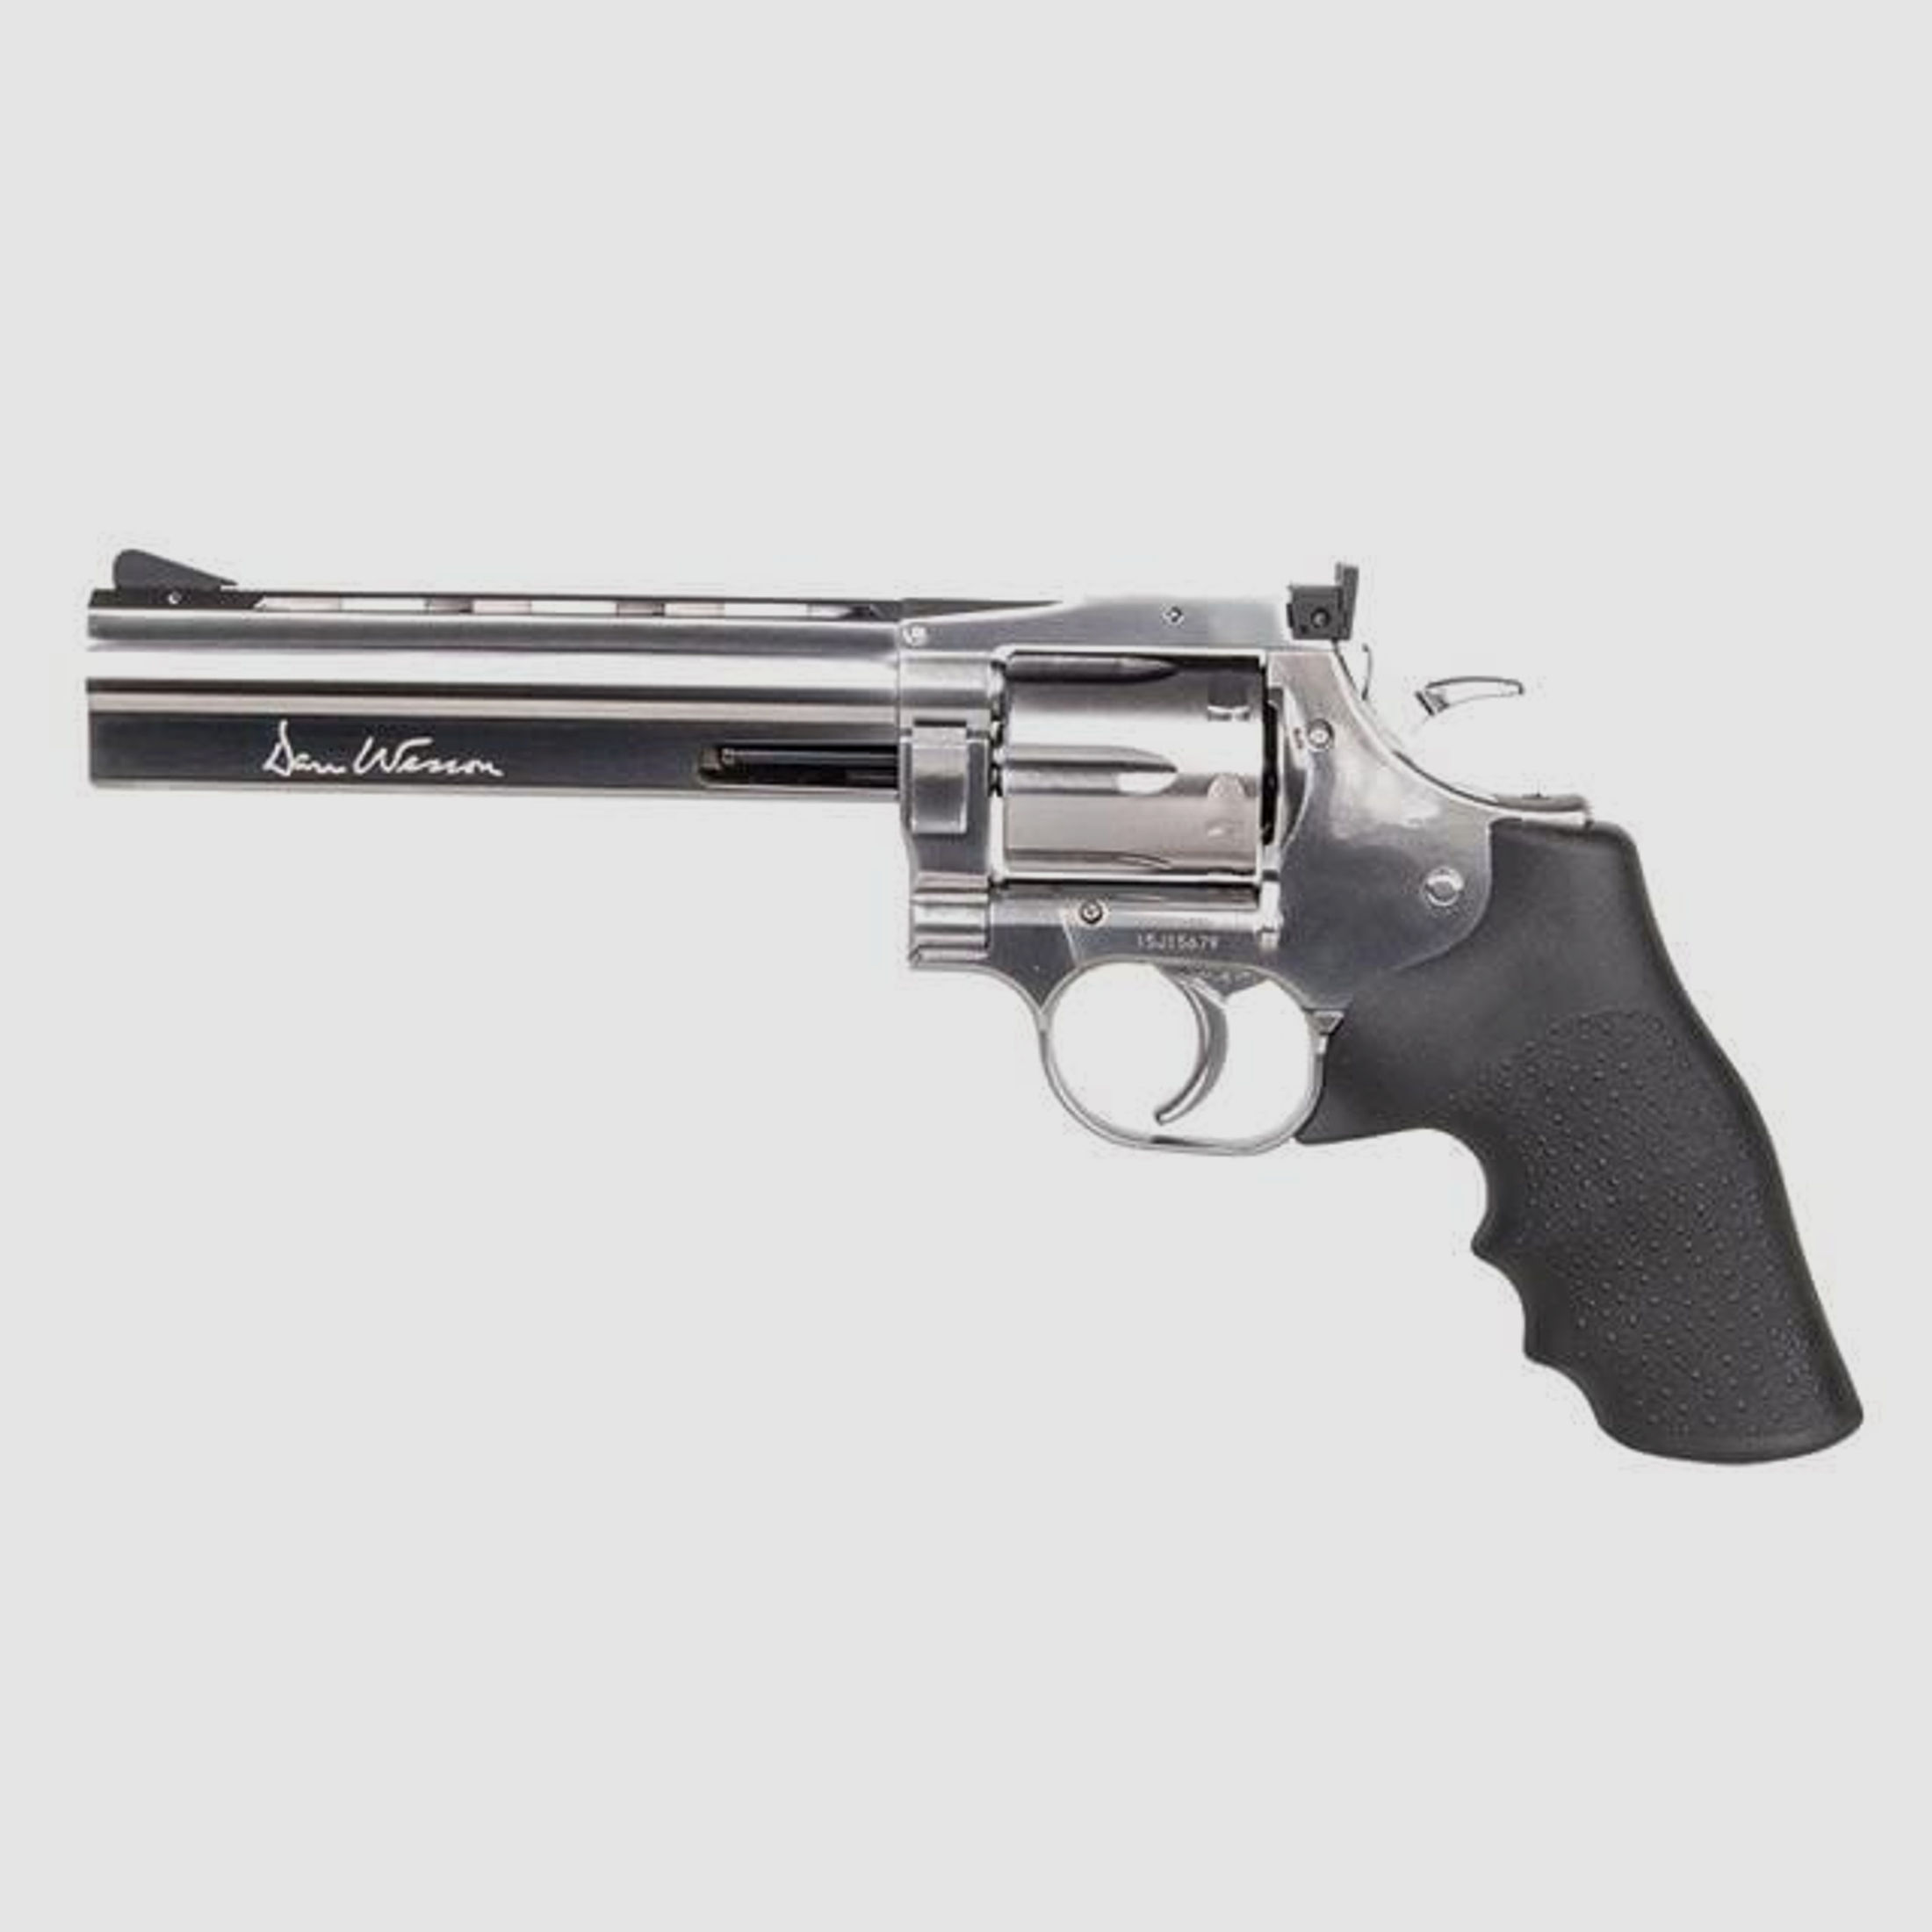 Dan Wesson 715 6' Luftdruck Revolver 4,5 mm